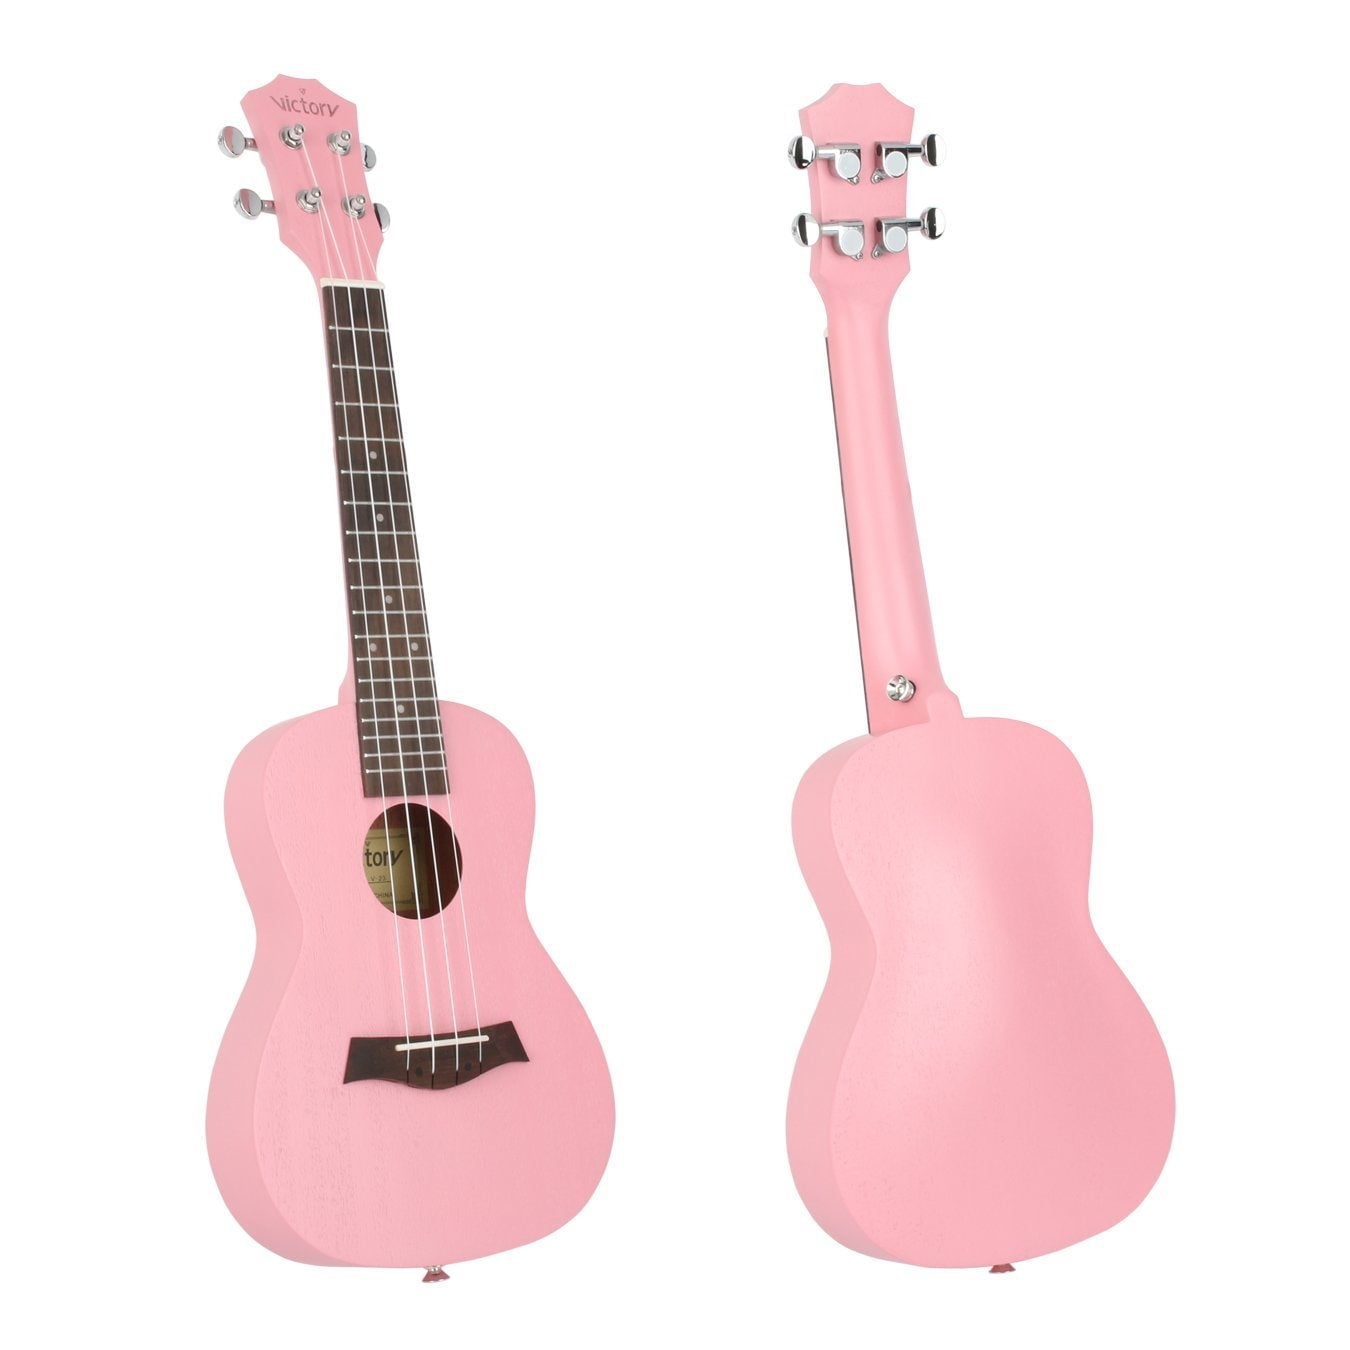 VIVICTORY 23 Concert Ukulele 5 1 Holiday Gift Kit [Pink] String Instrument by - Walmart.com